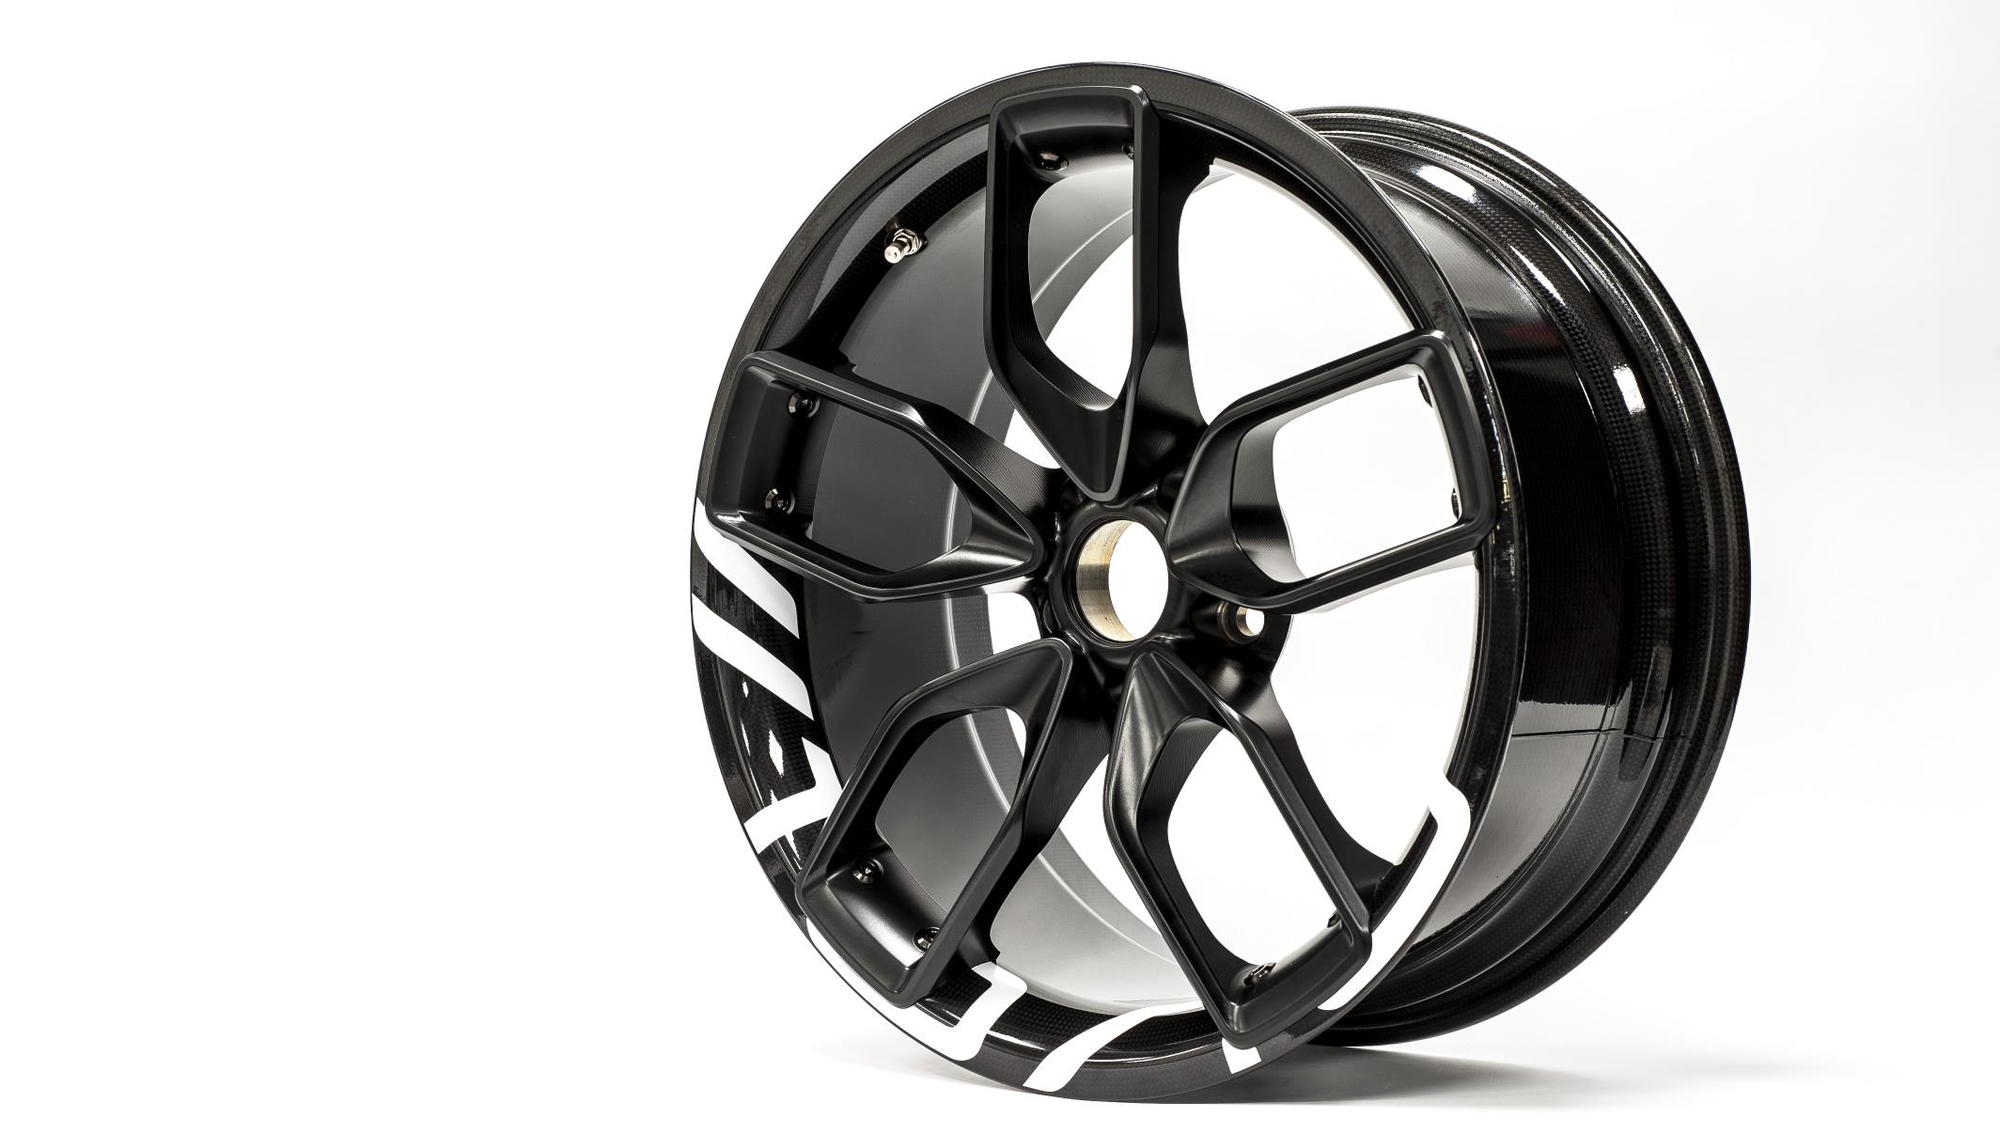 BAC carbon fiber wheel set